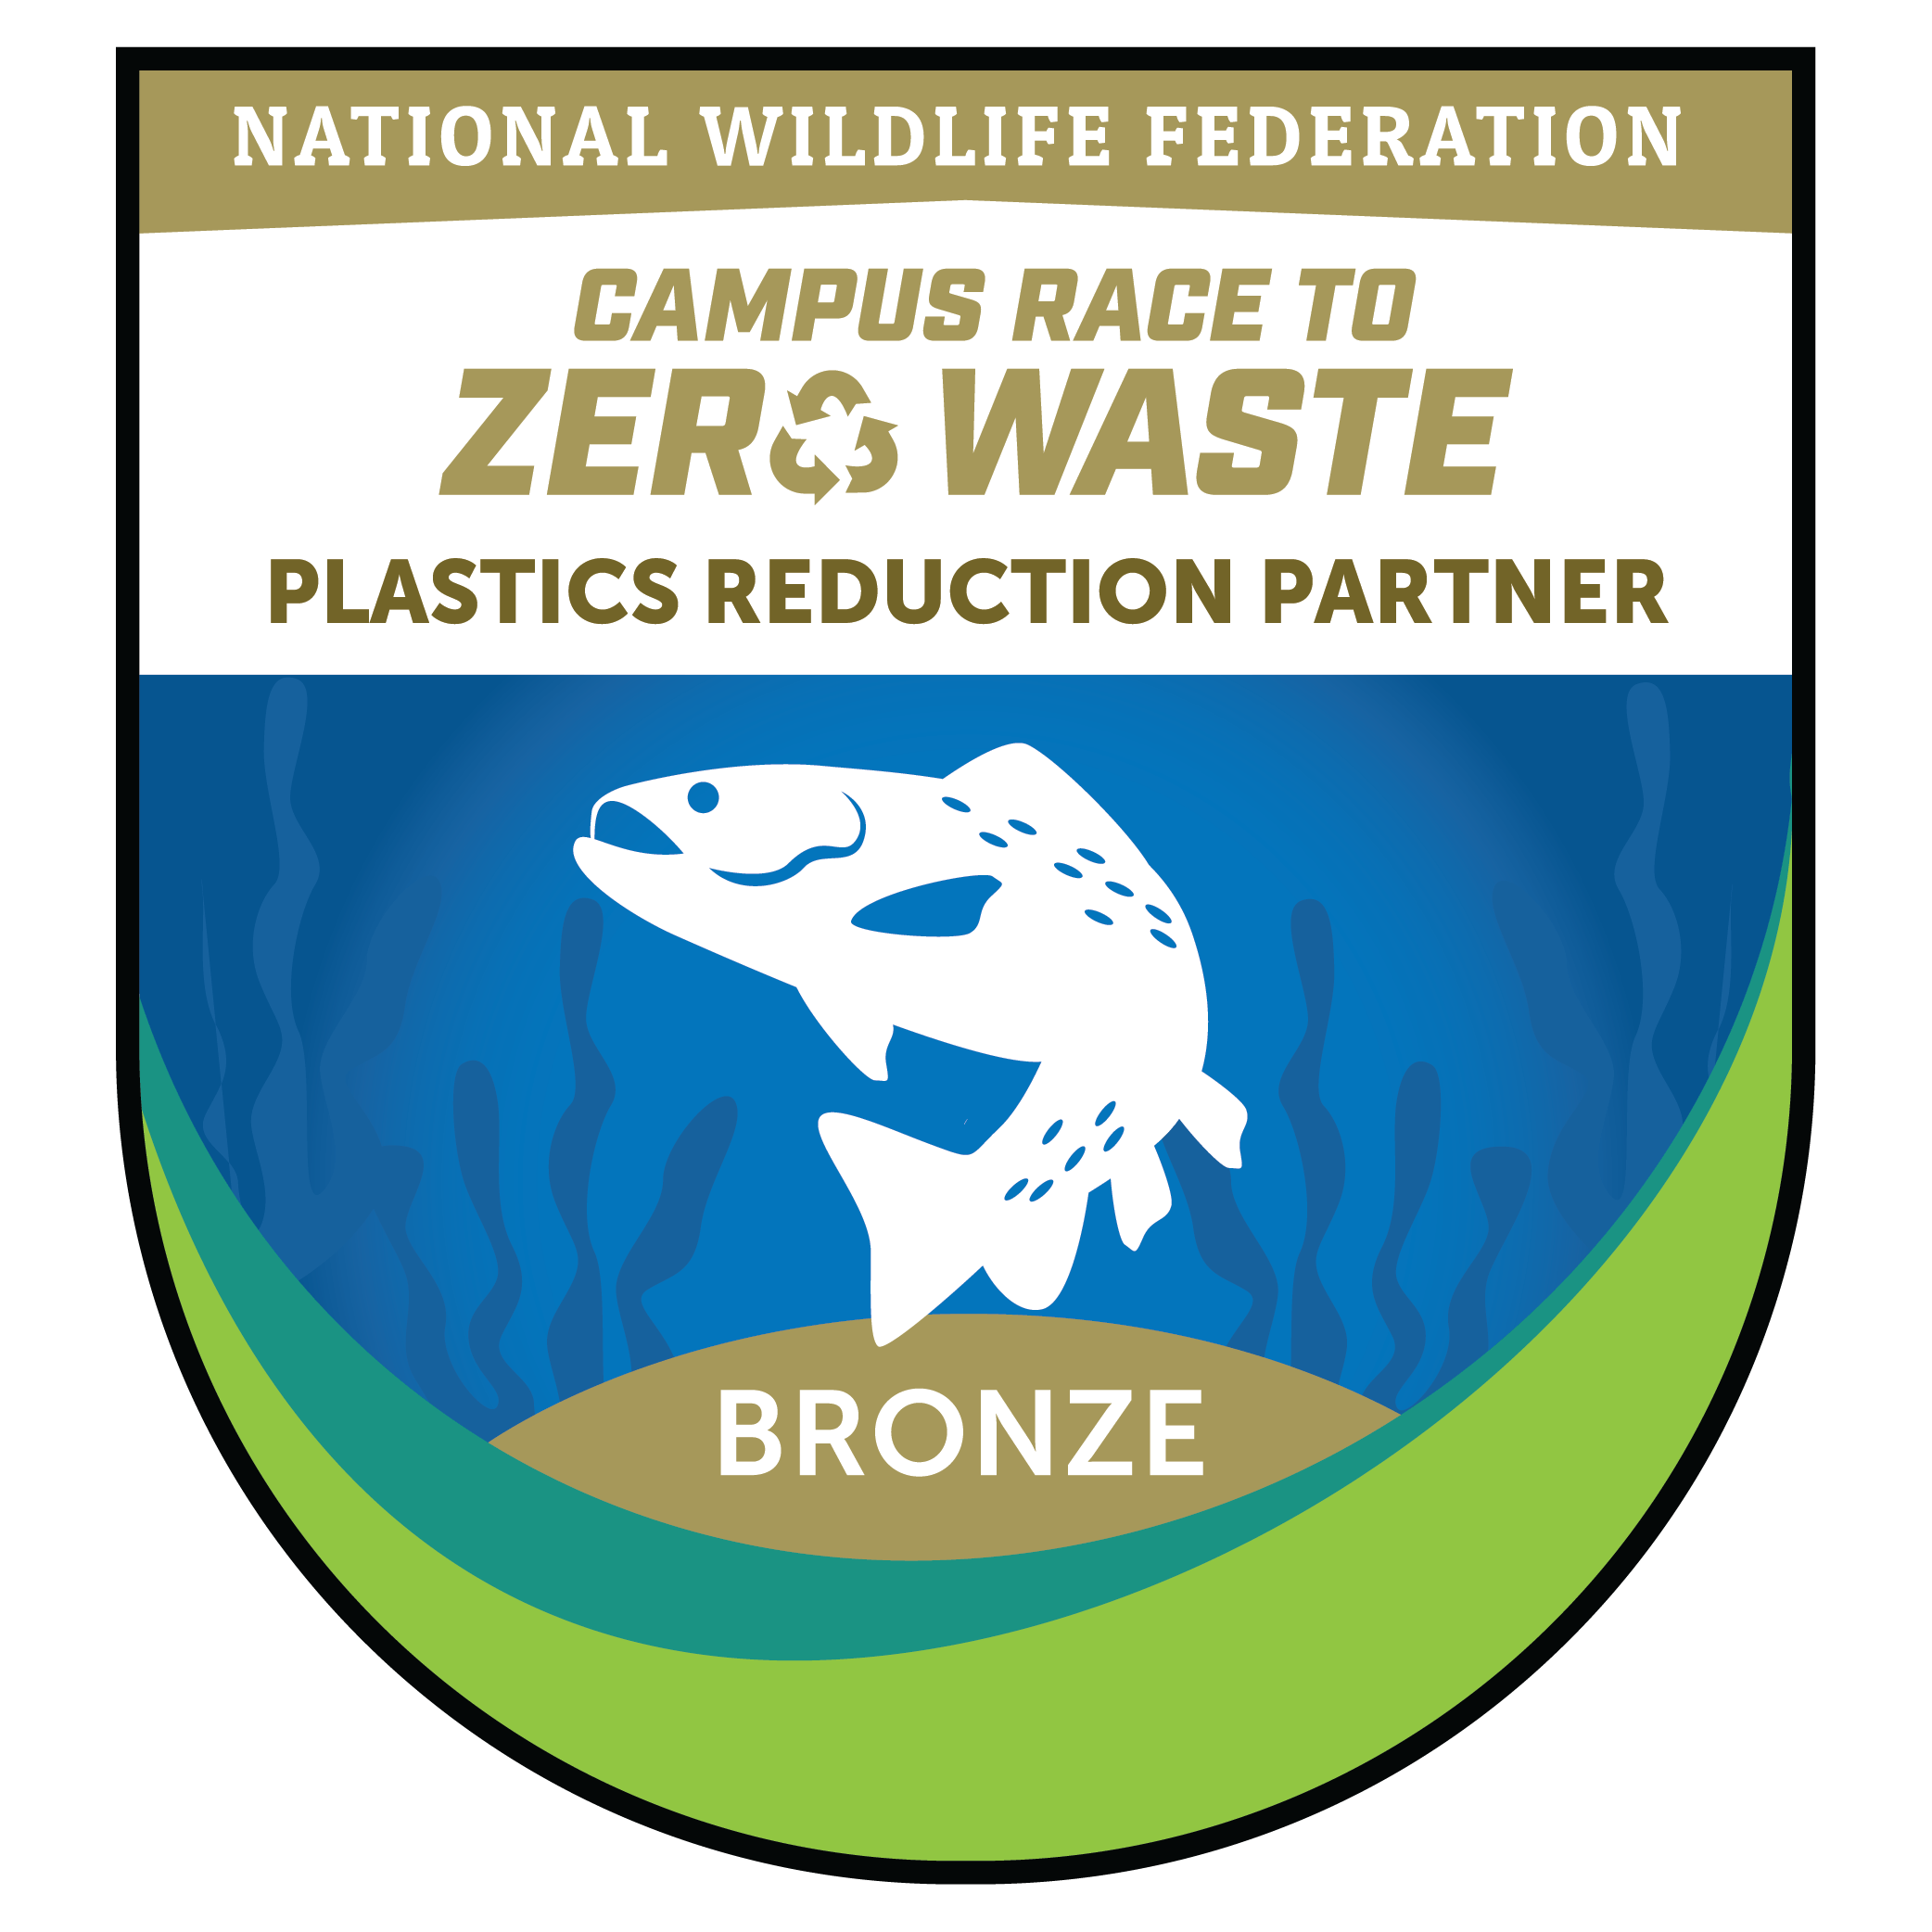 Plastics Reduction Partner (Bronze) badge from the National Wildlife Federation